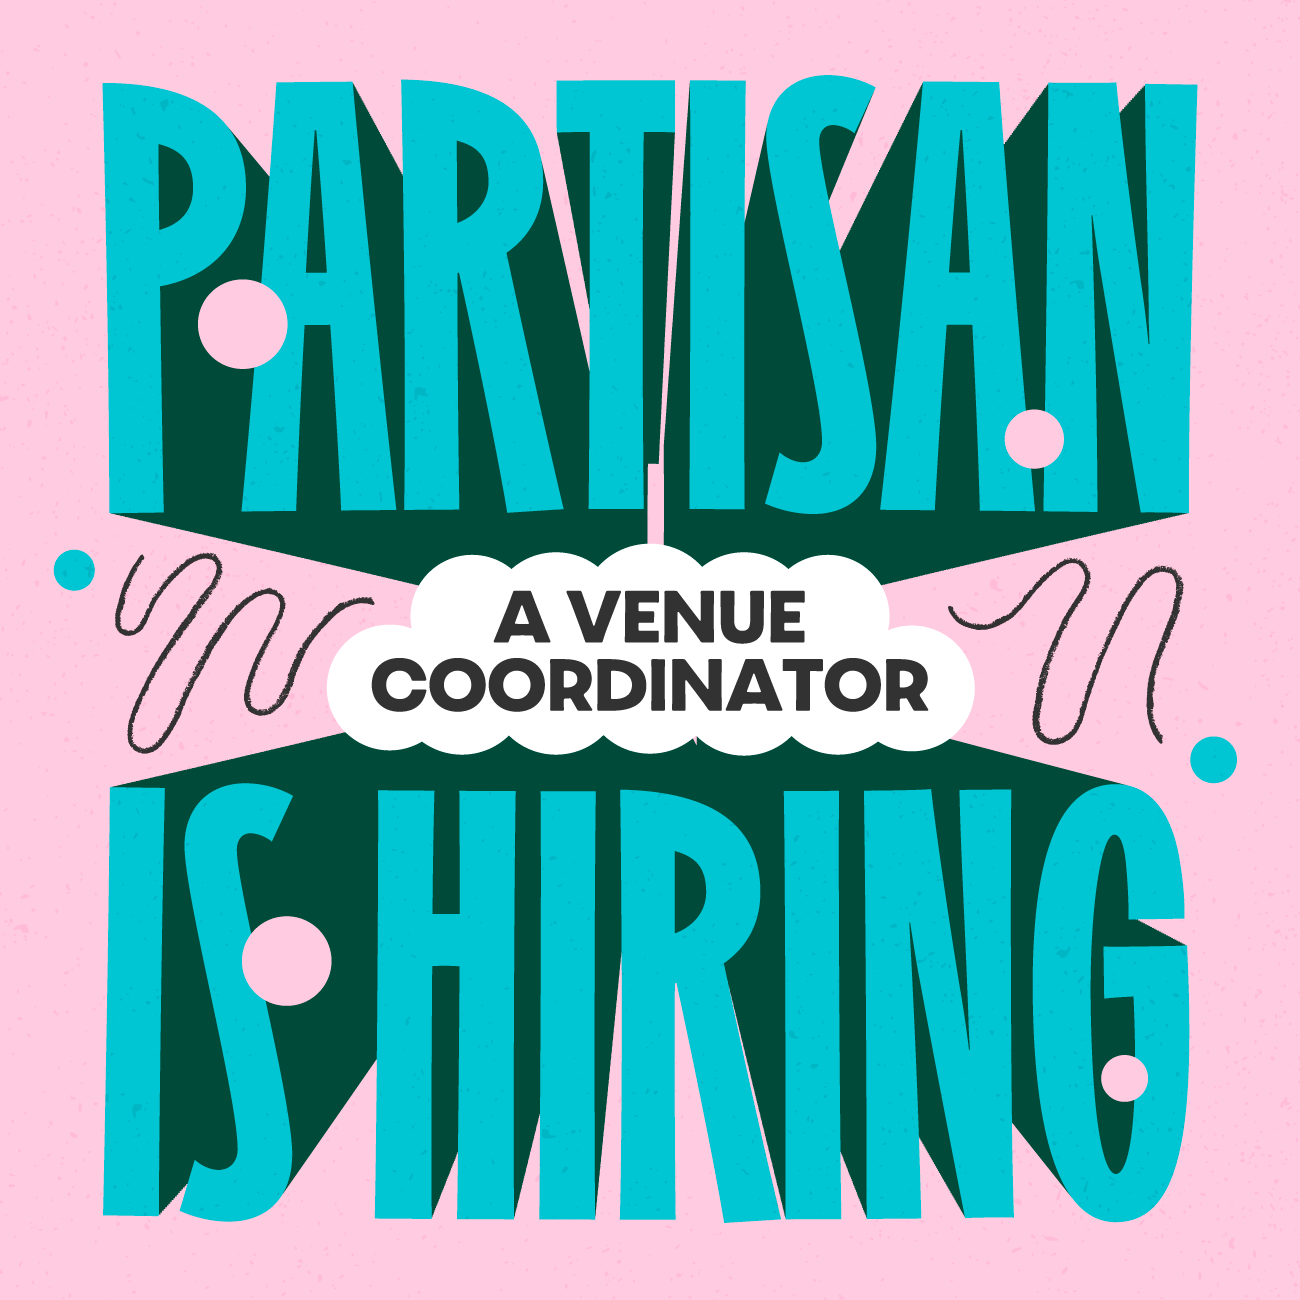 Partisan is hiring a venue coordinator